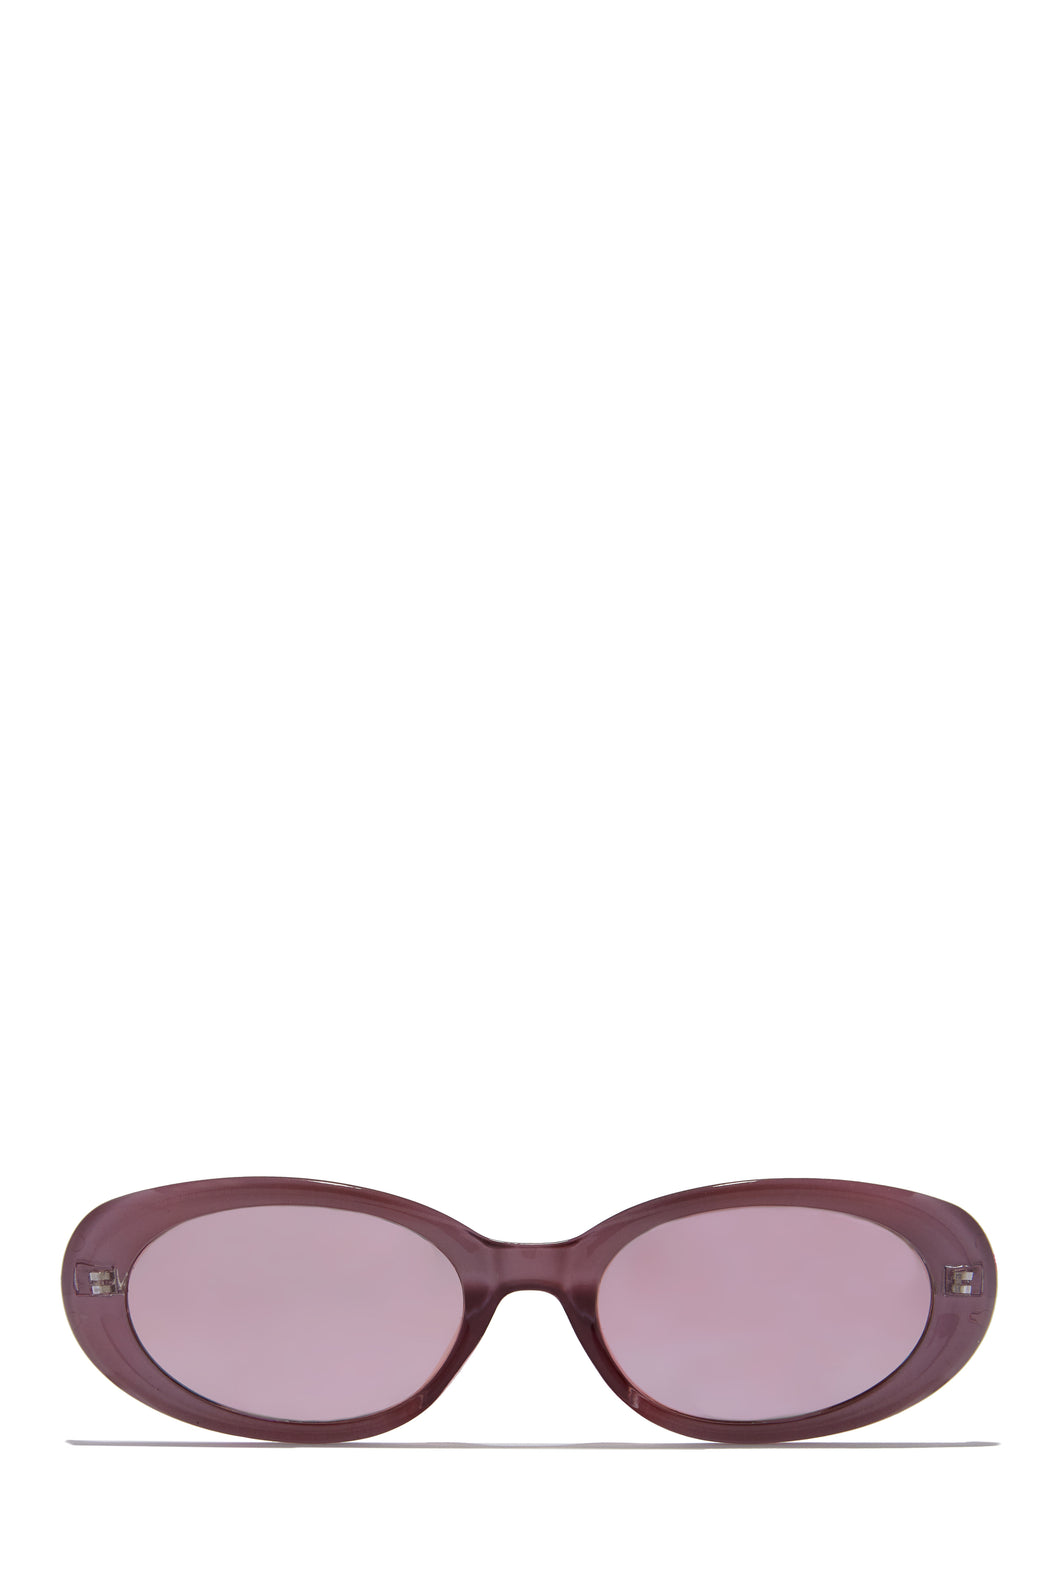 Purple Glasses